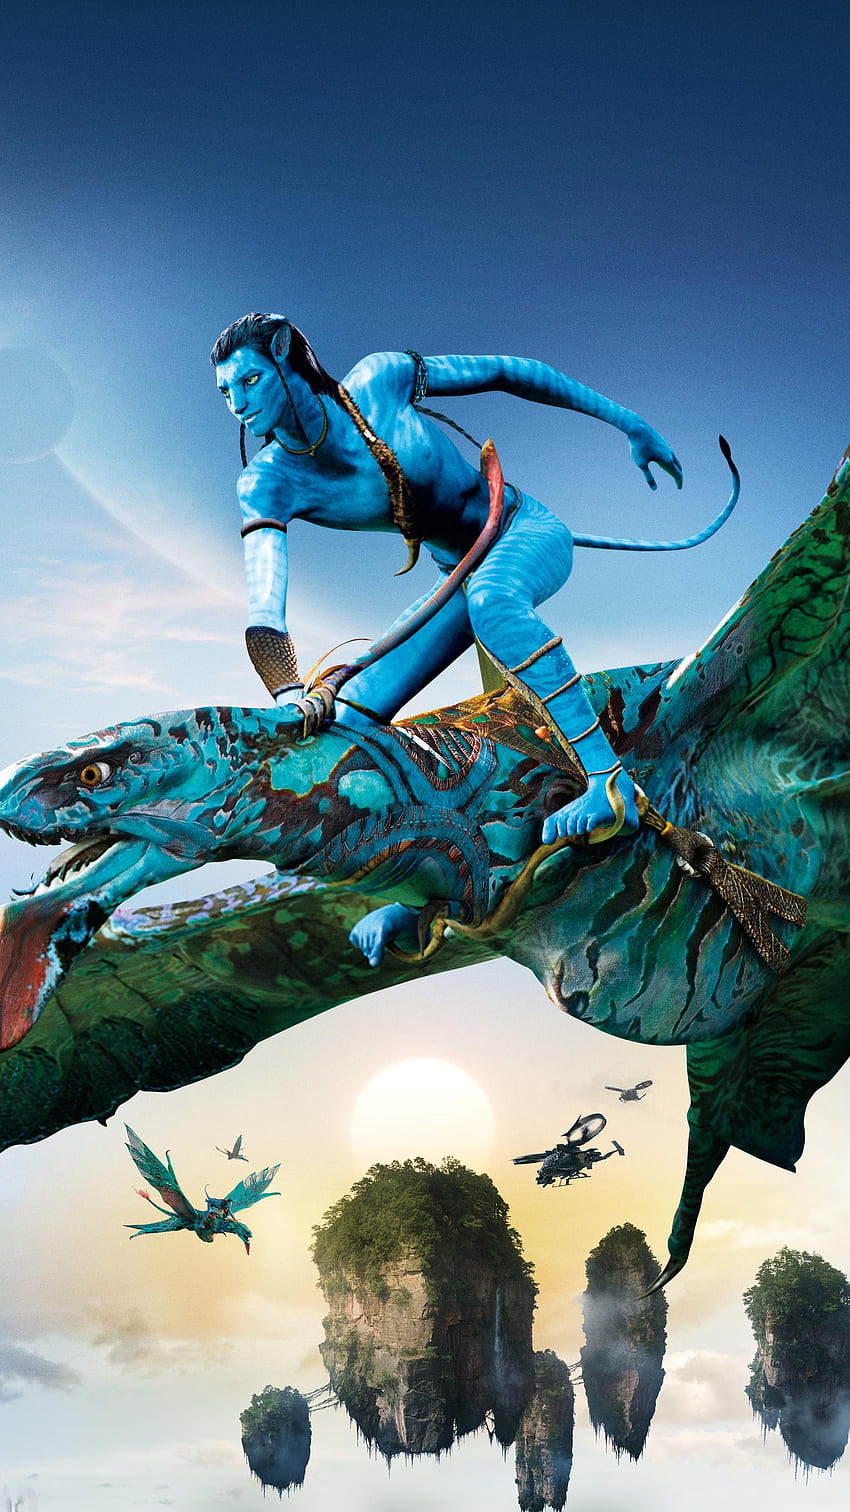 Avatar the way of water wallpaper  Visual Masterpiece  James Cameron   Oscar  Avatar picture Avatar animals Pandora avatar